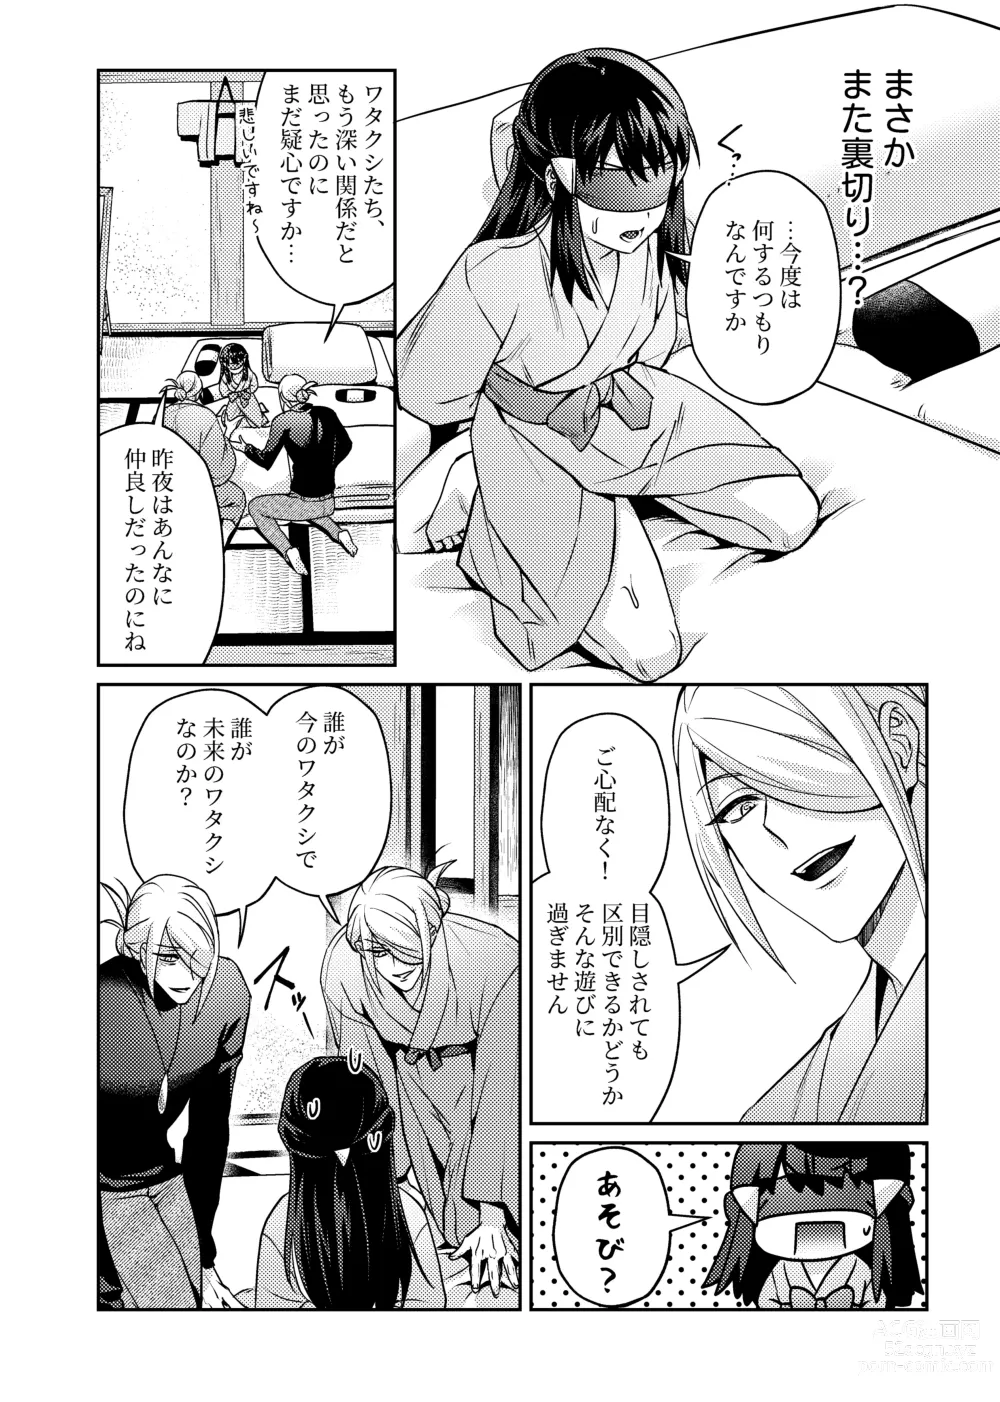 Page 4 of doujinshi Mekakushi VoShou